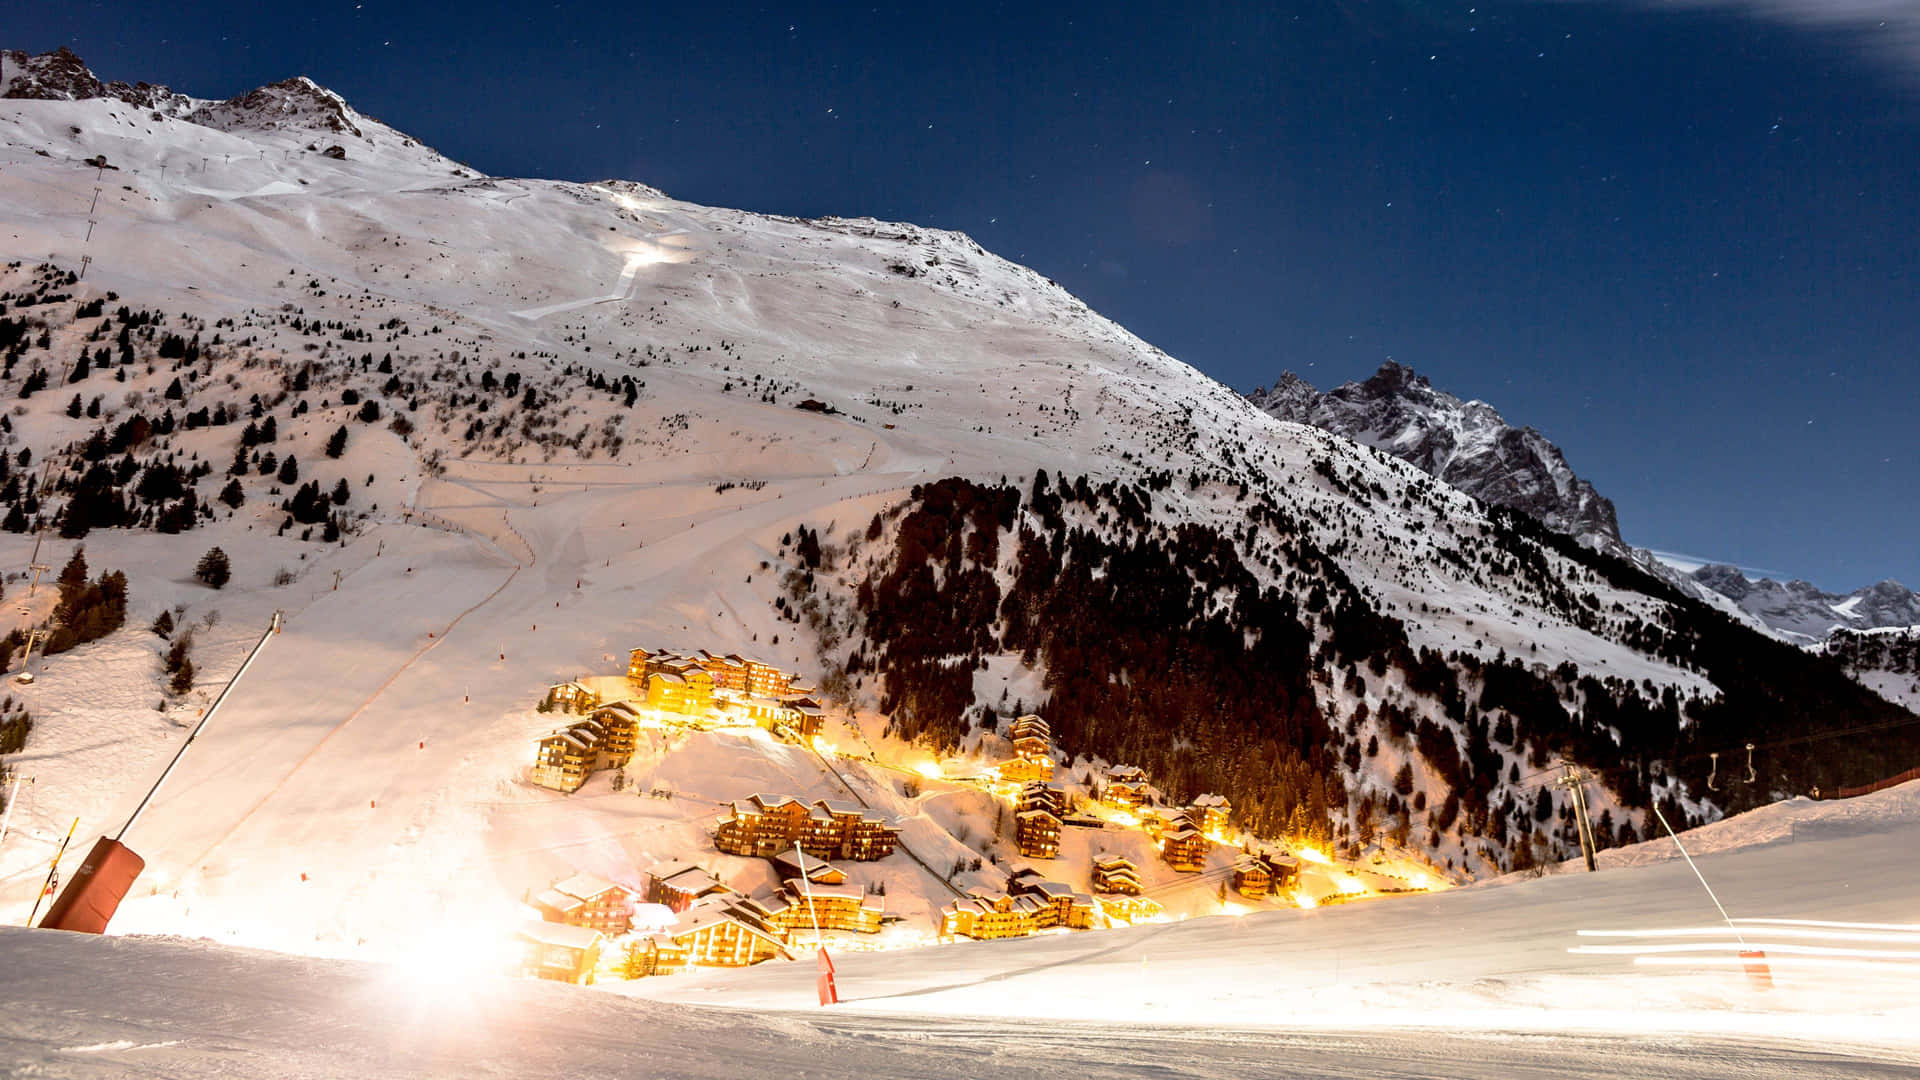 Breathtaking Scenery at Ski Resort Wallpaper